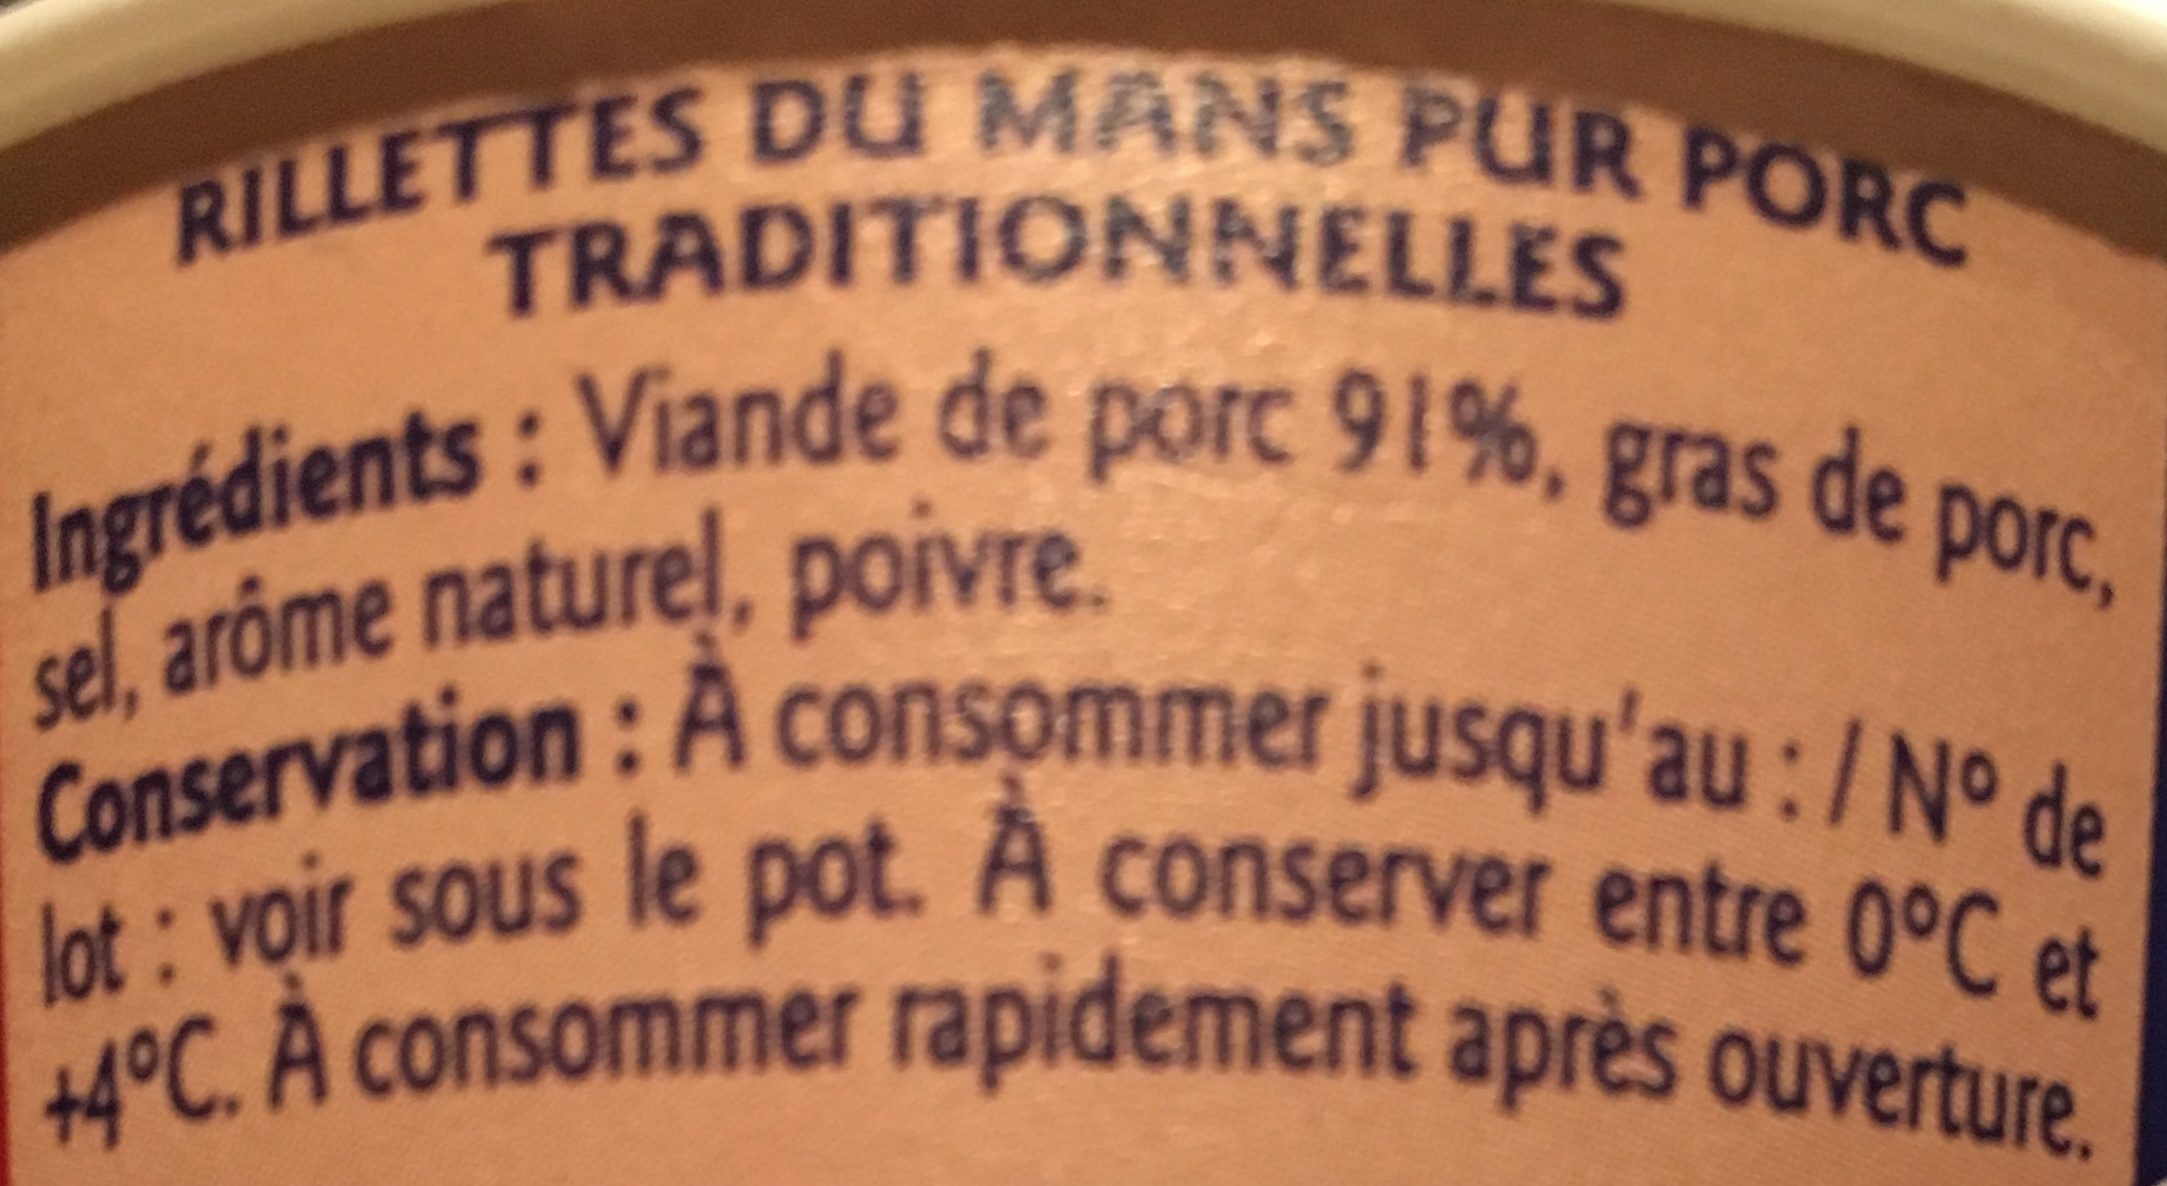 Rillettes pur porc - Ingrediënten - fr